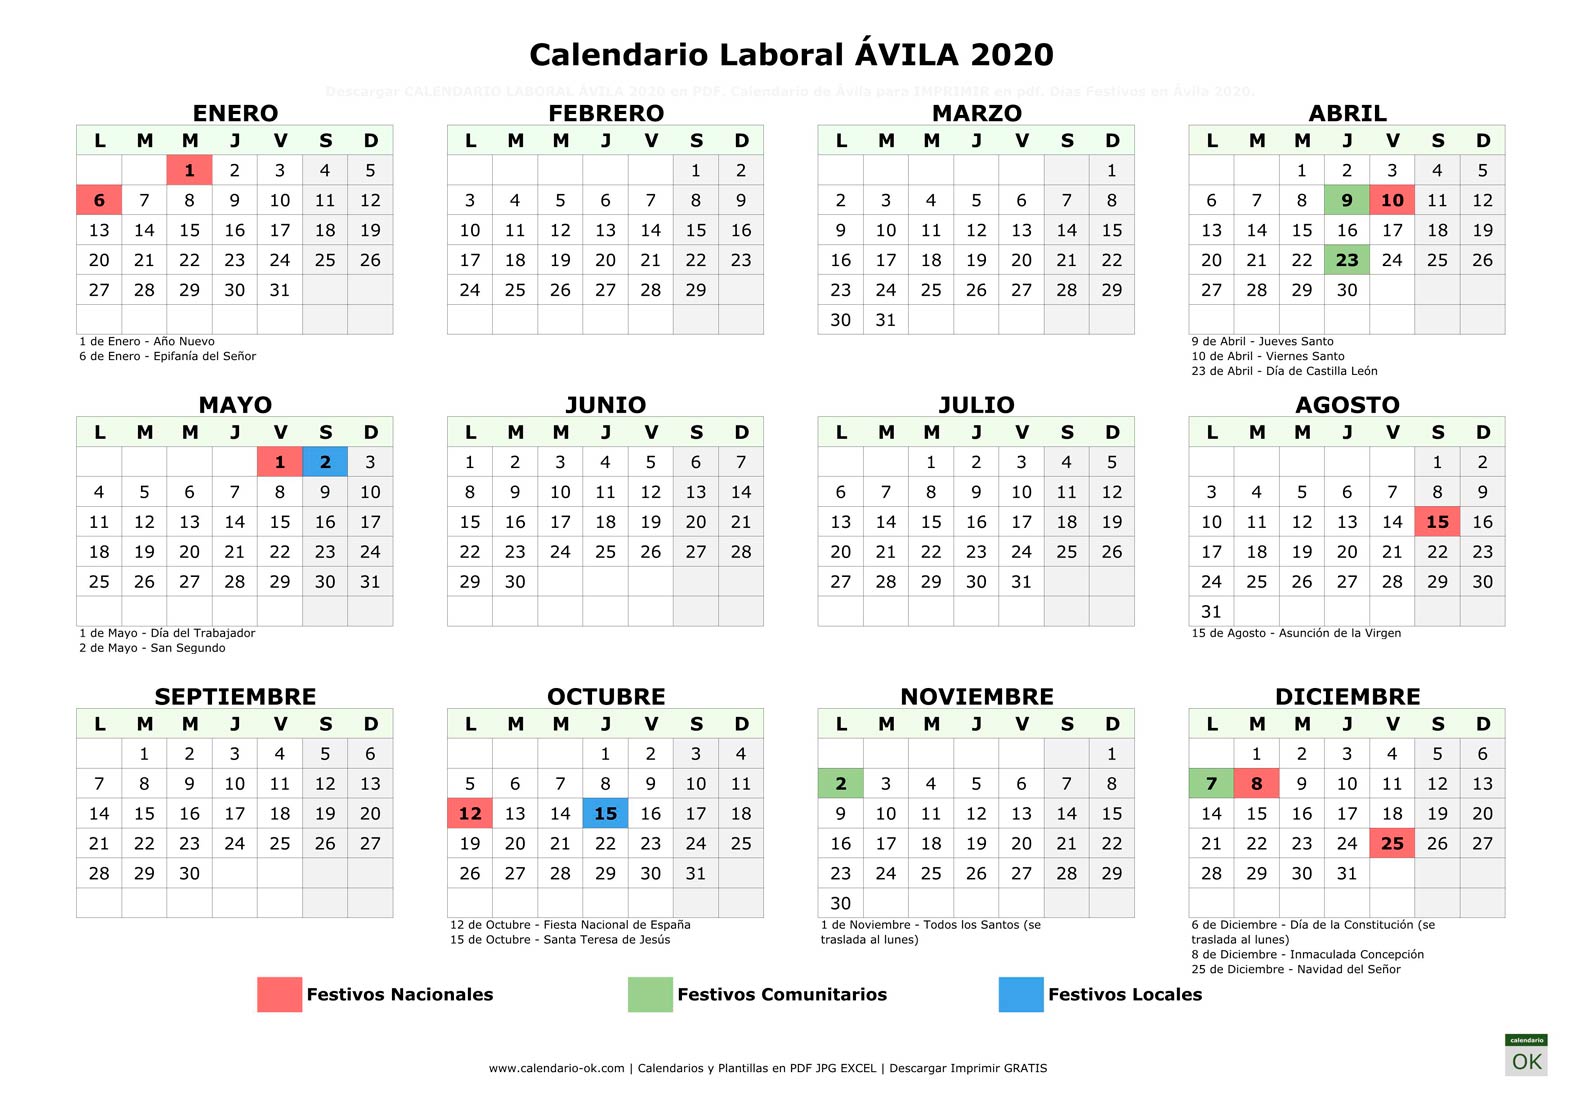 Calendario Laboral ÁVILA 2020 horizontal